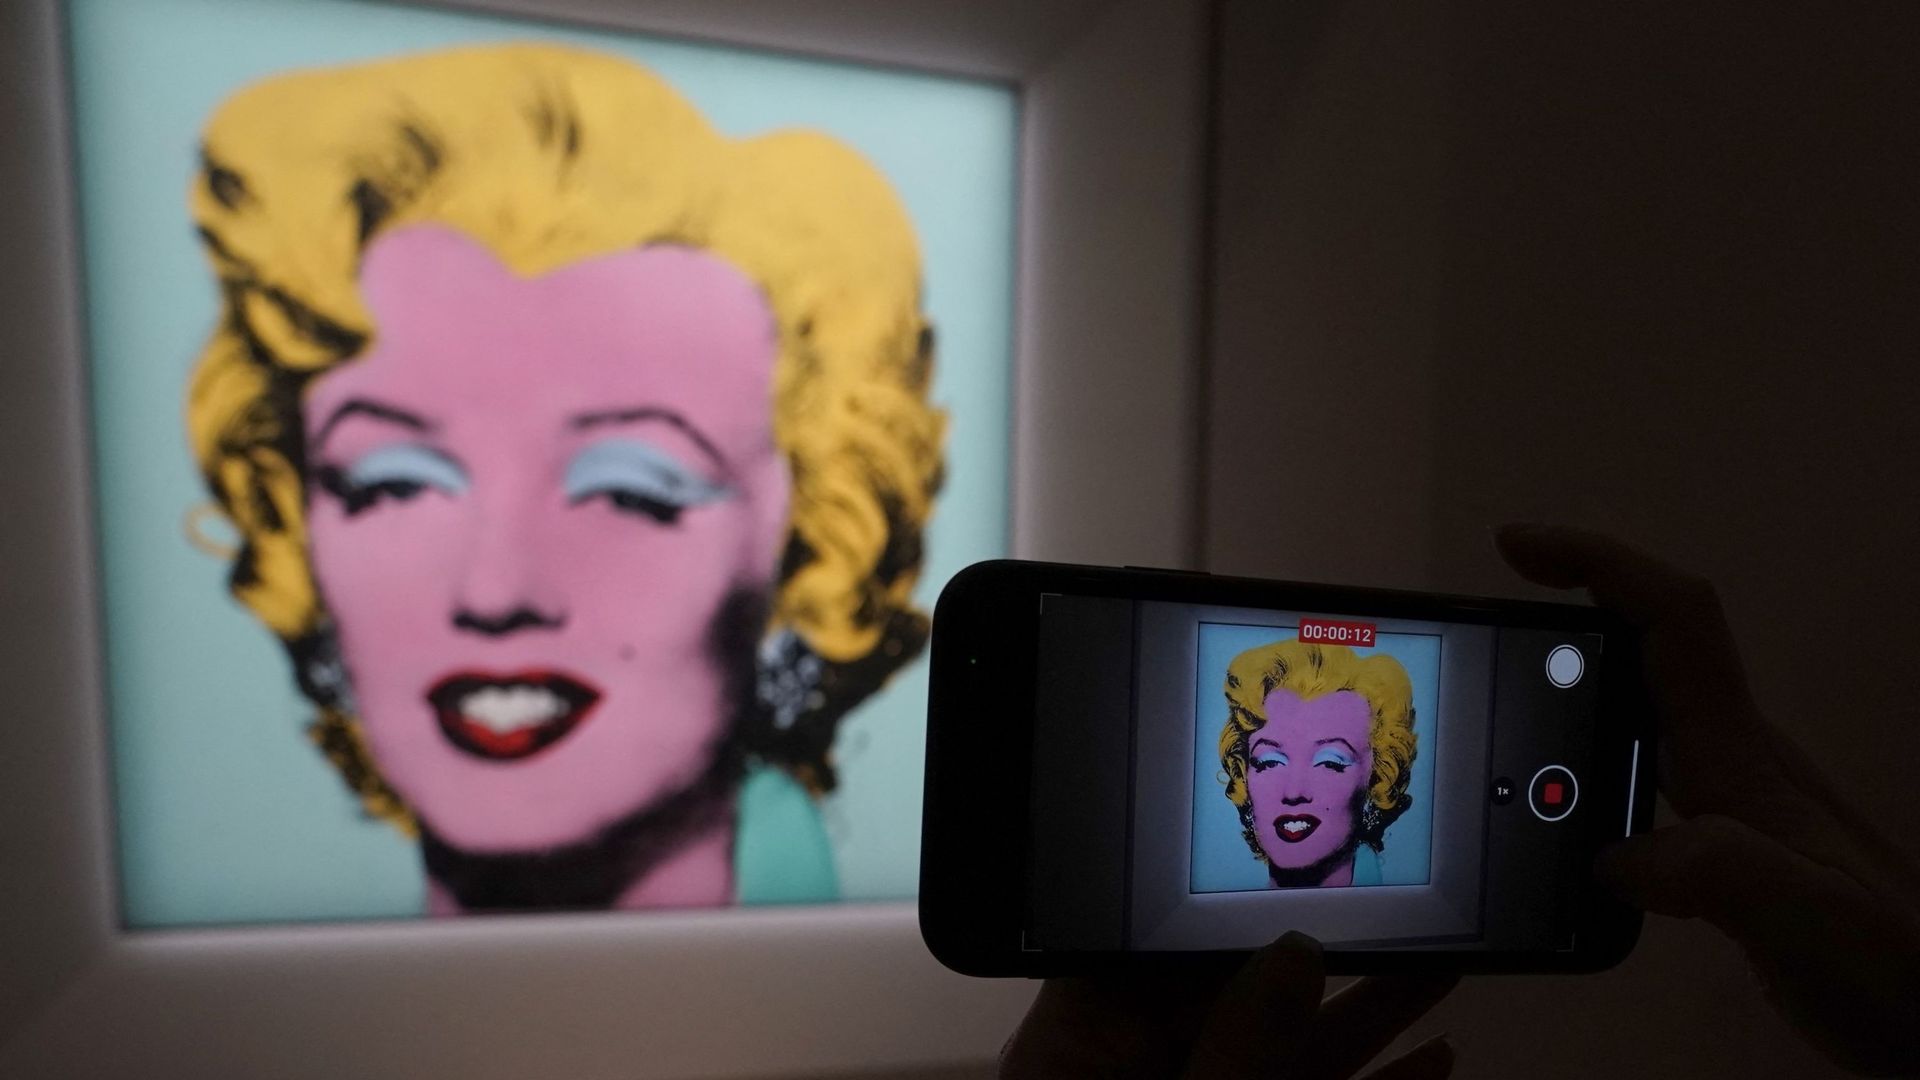 Le portrait "Sage Blue Marilyn" d’Andy Warhol